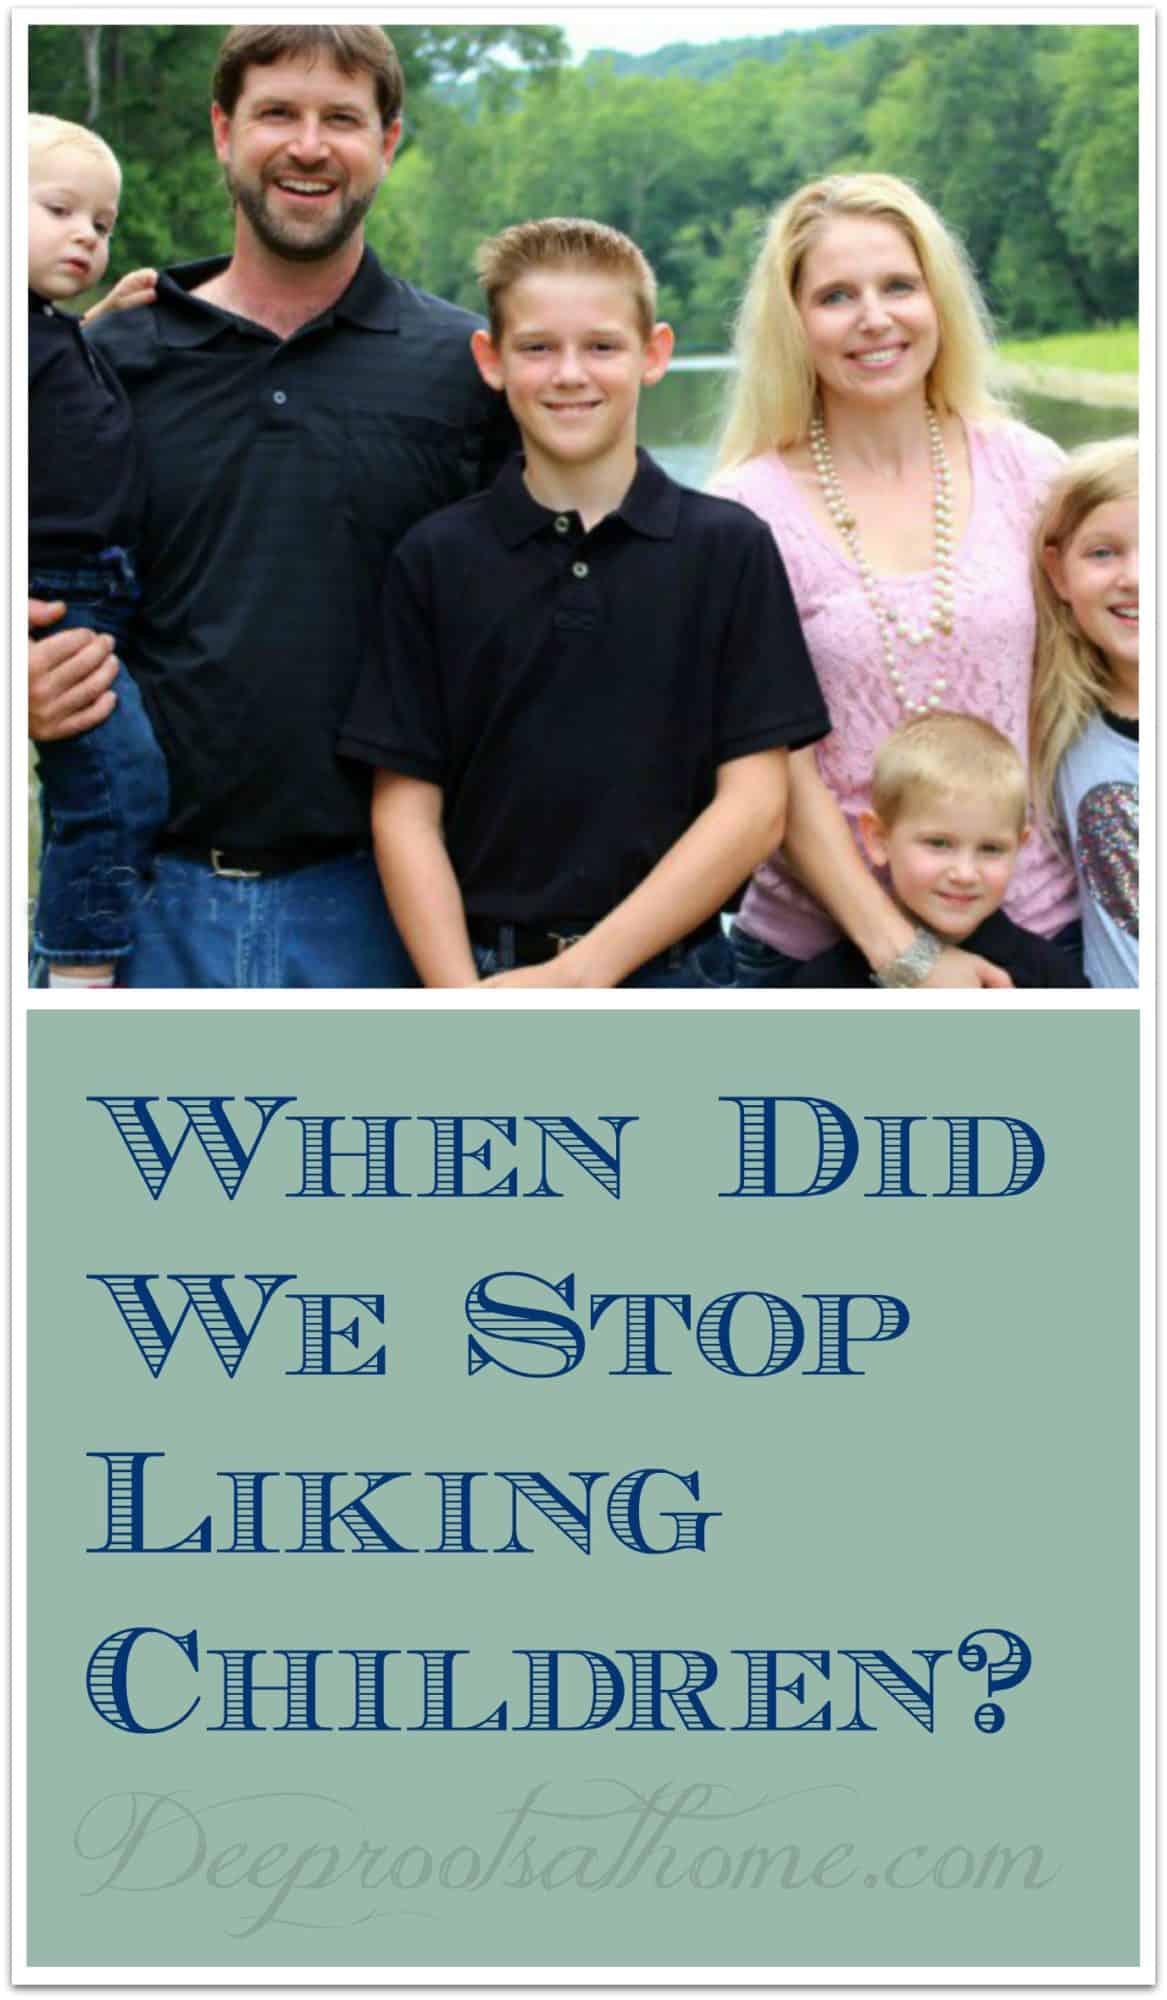 When Did We Stop Liking Children? The Platt family Pin Image